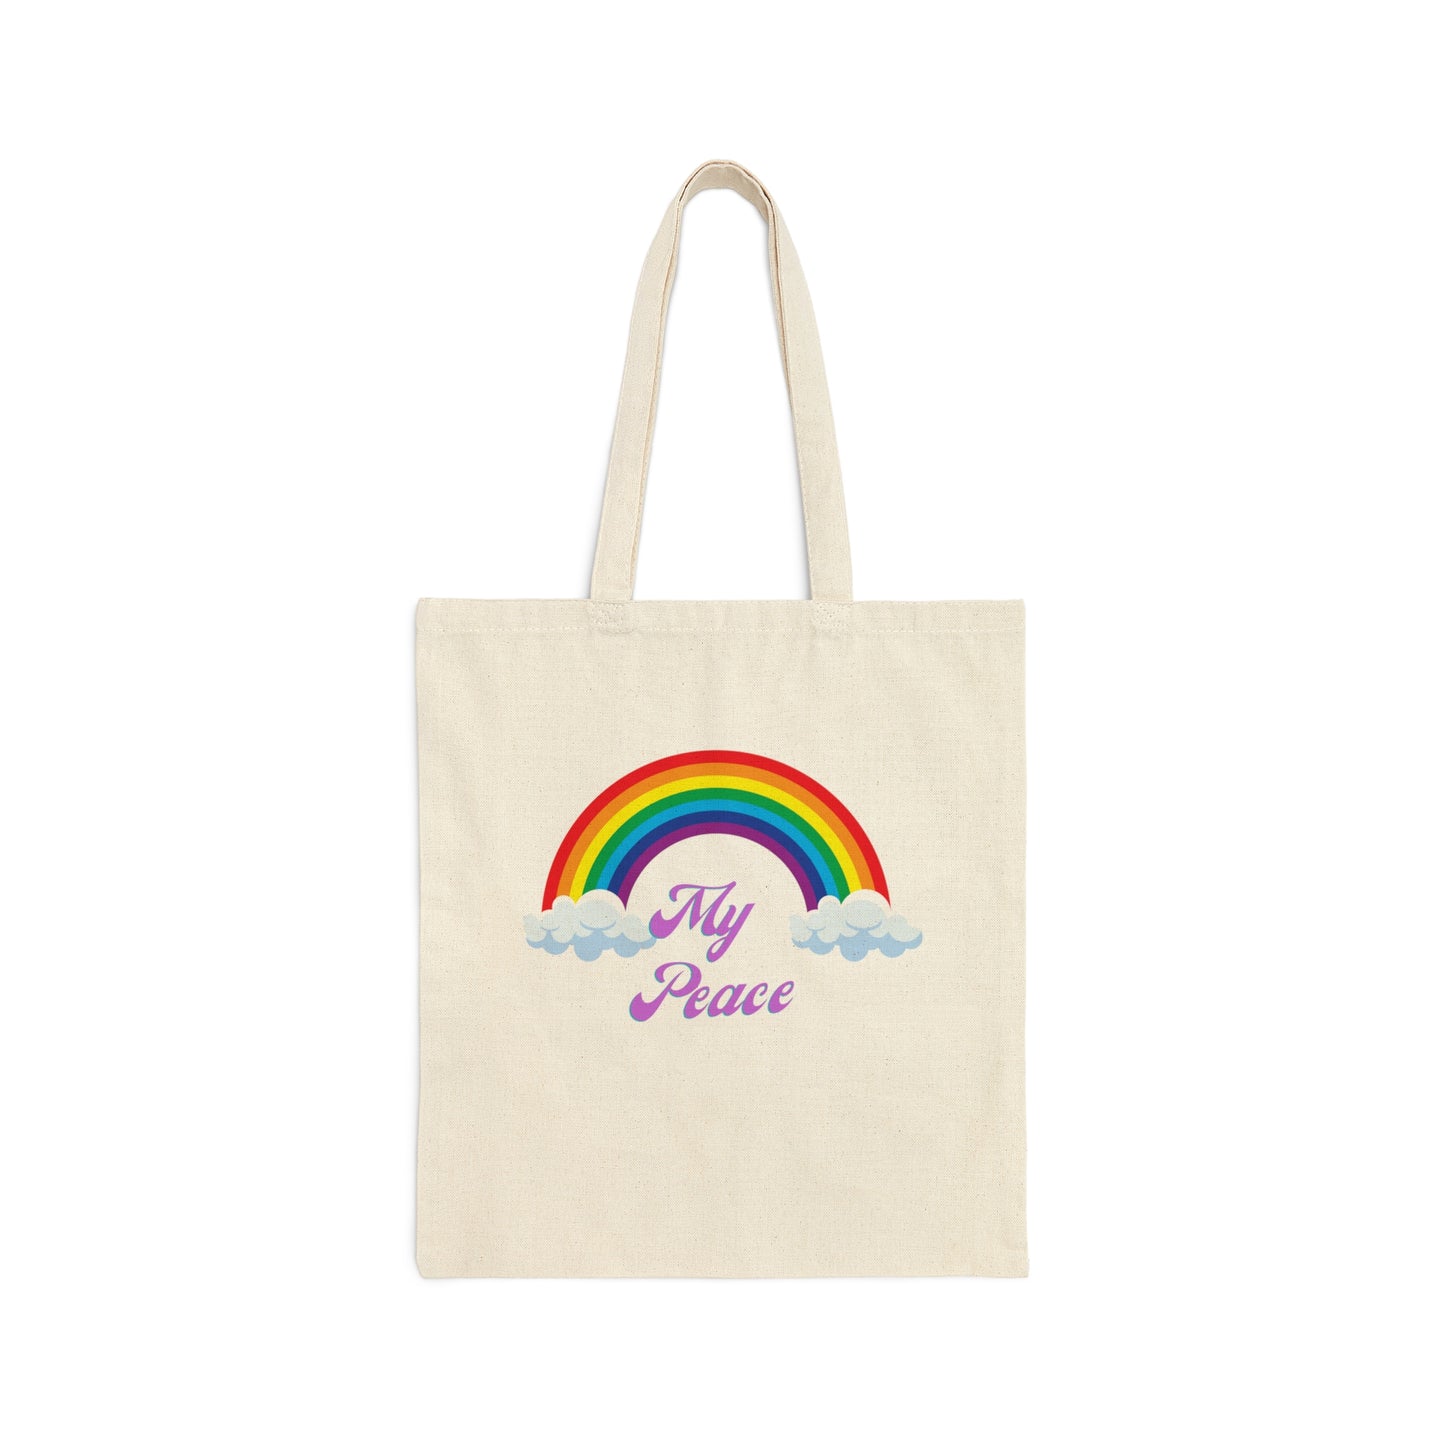 My Peace Rainbow Theme Cotton Canvas Tote Bag